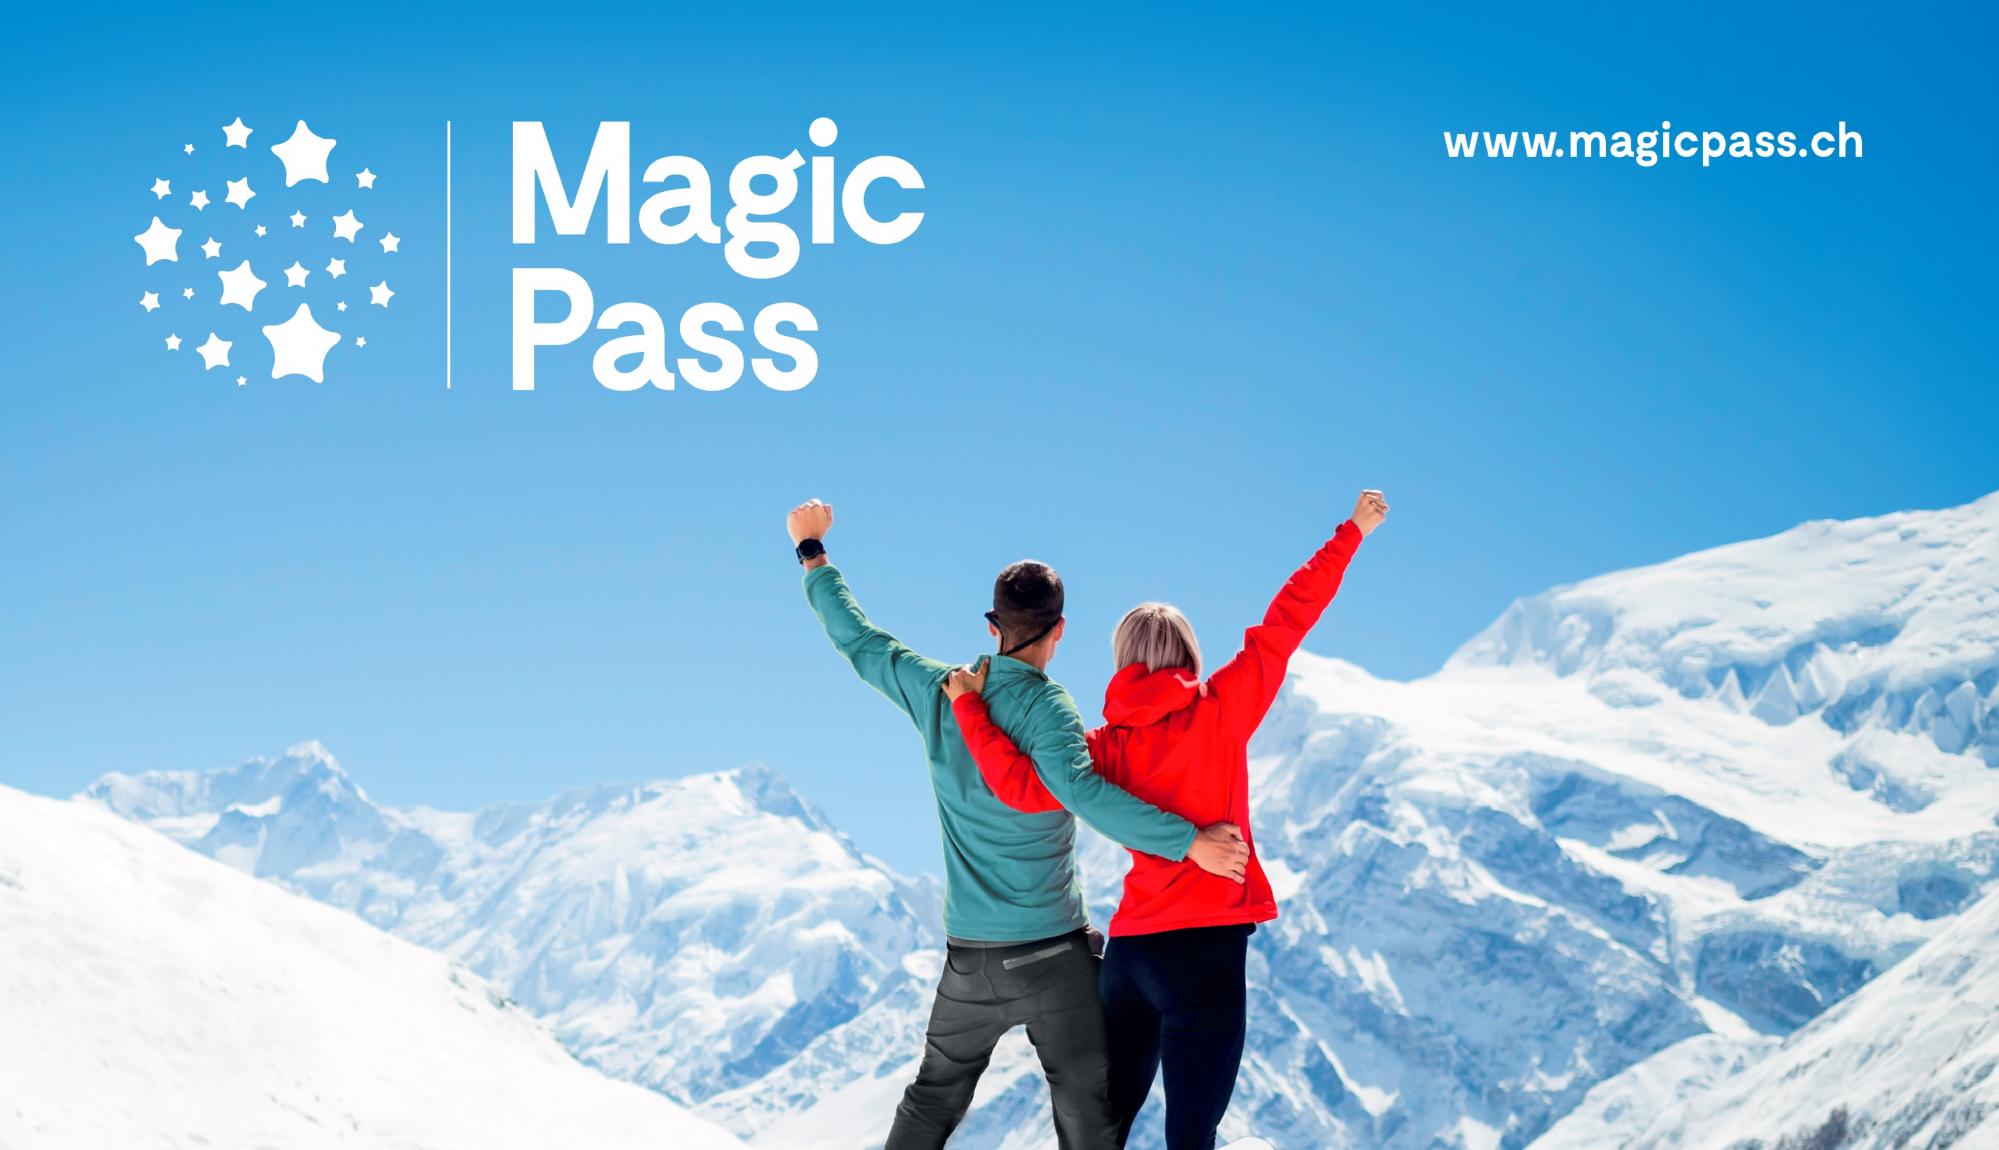 Magic Pass 2019/2020 - Over 121,000 passes sold